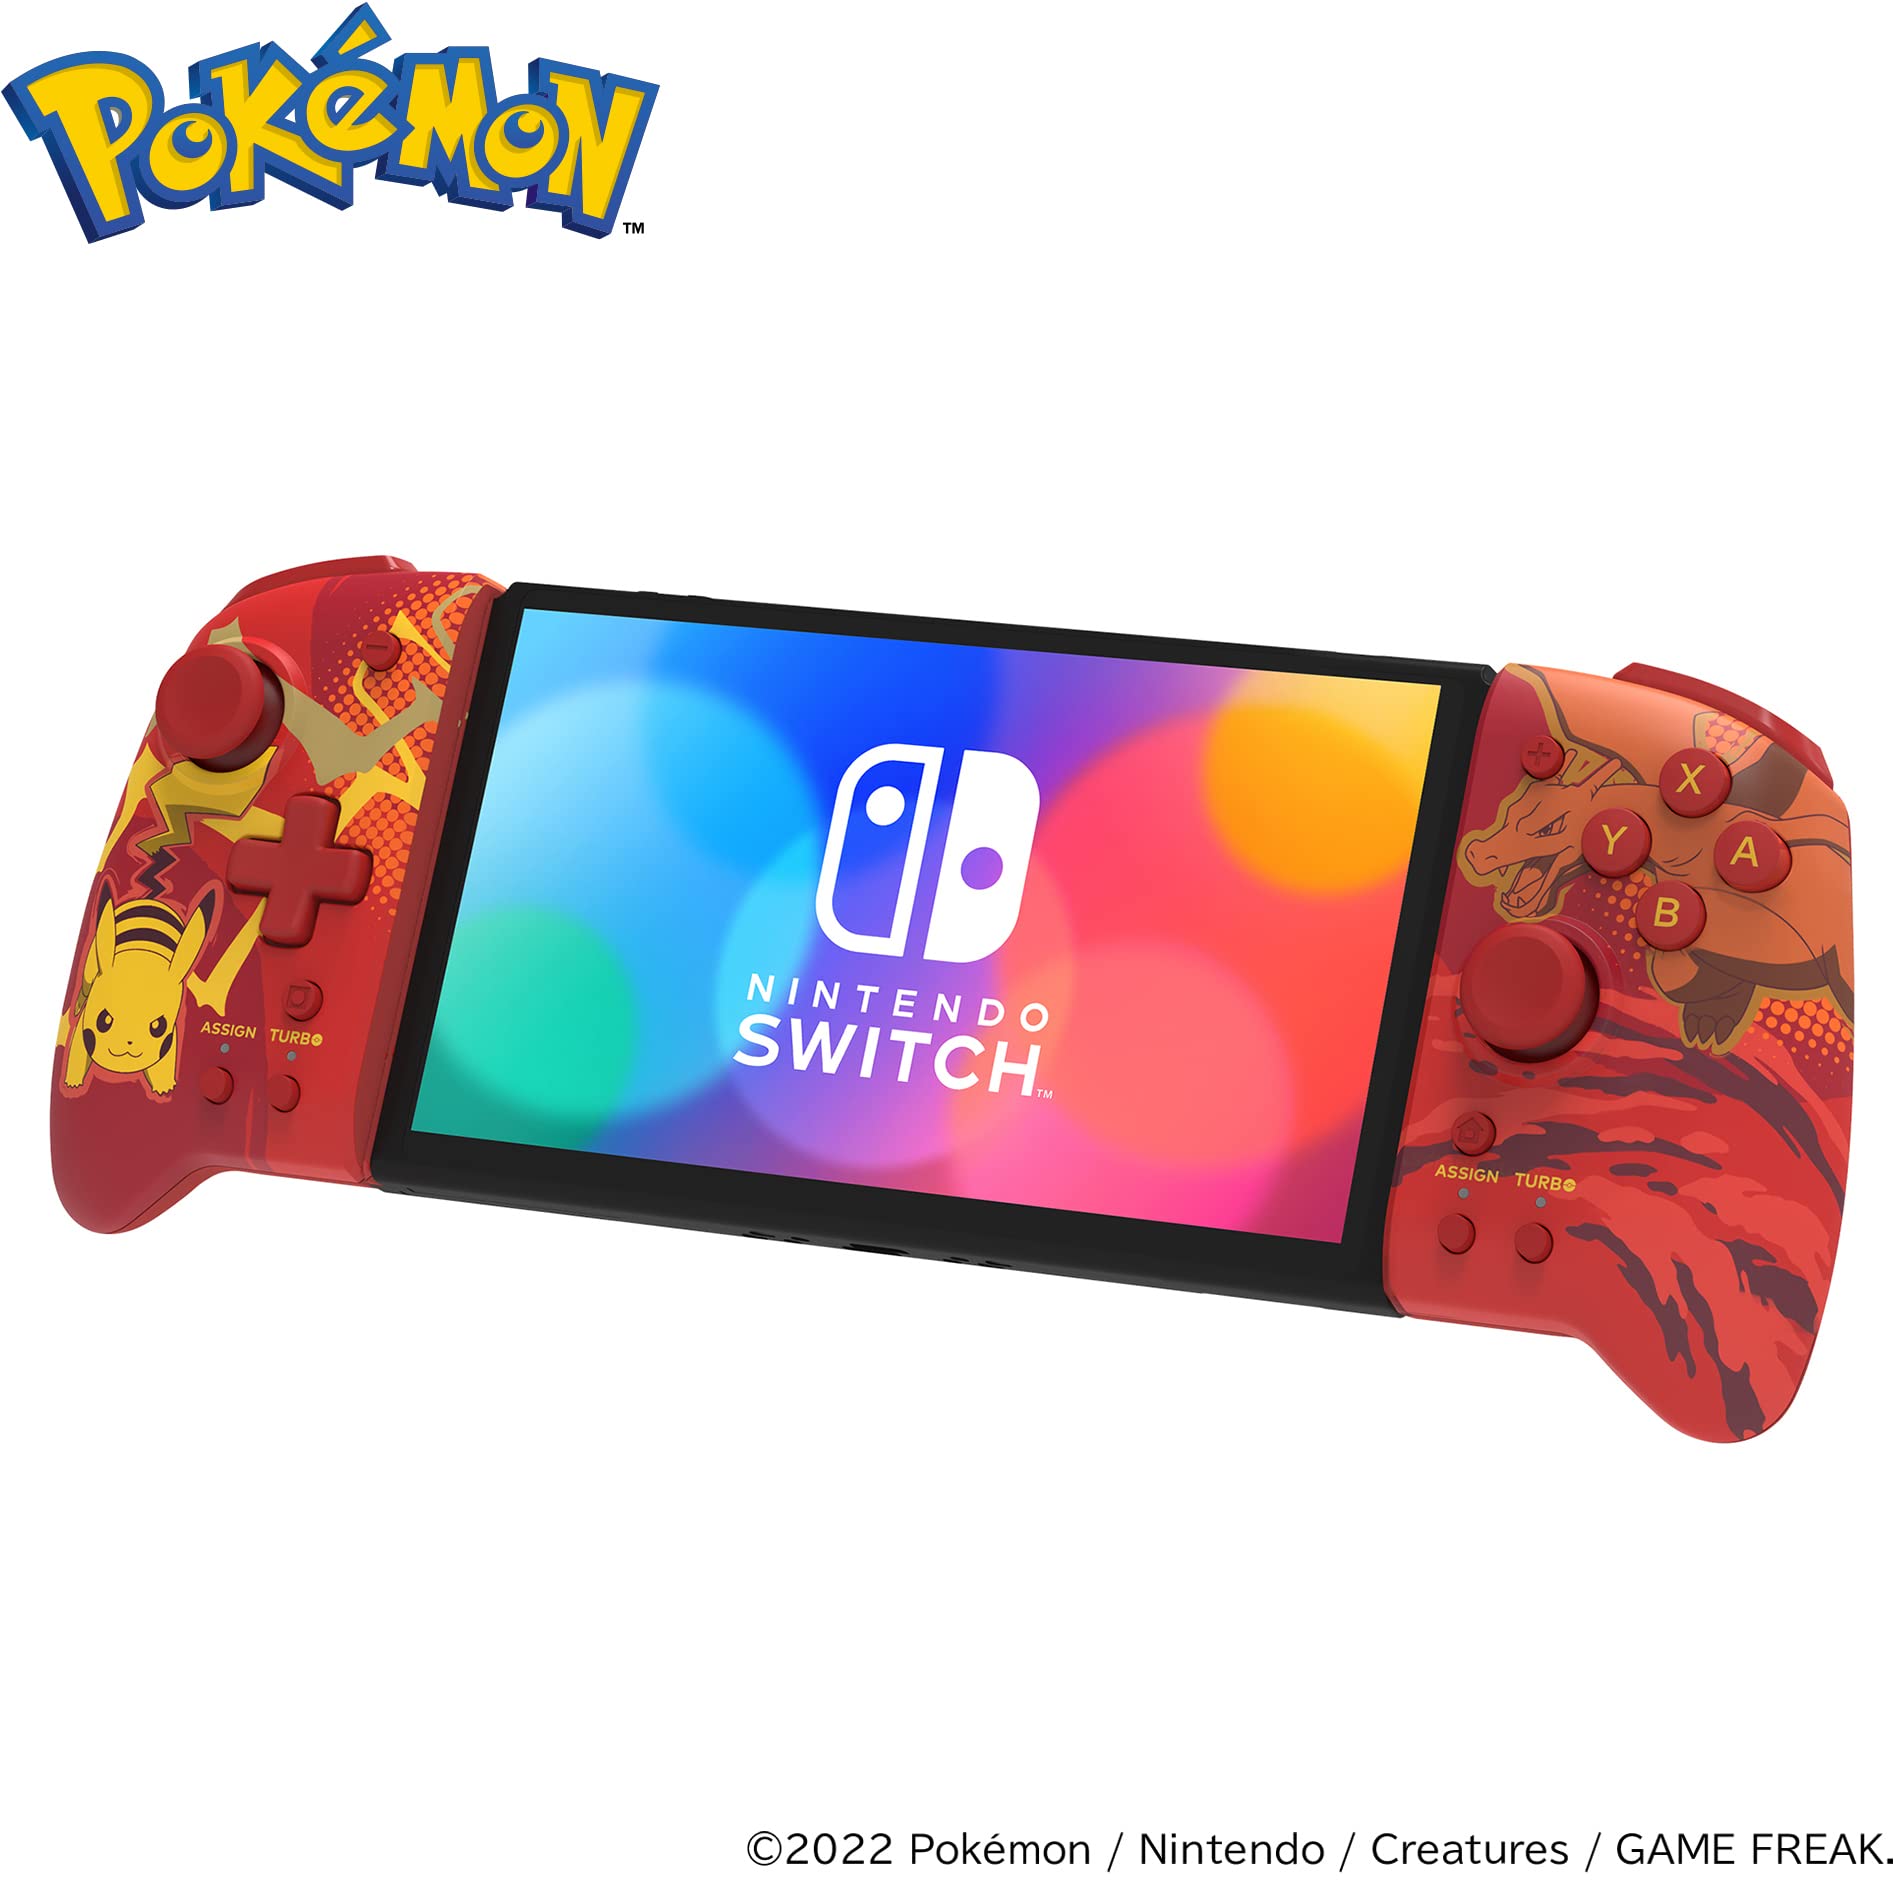 HORI Nintendo Switch Split Pad Pro (Pikachu & Charizard) - Ergonomic Controller for Handheld Mode - Officially Licensed by Nintendo & Pokémon